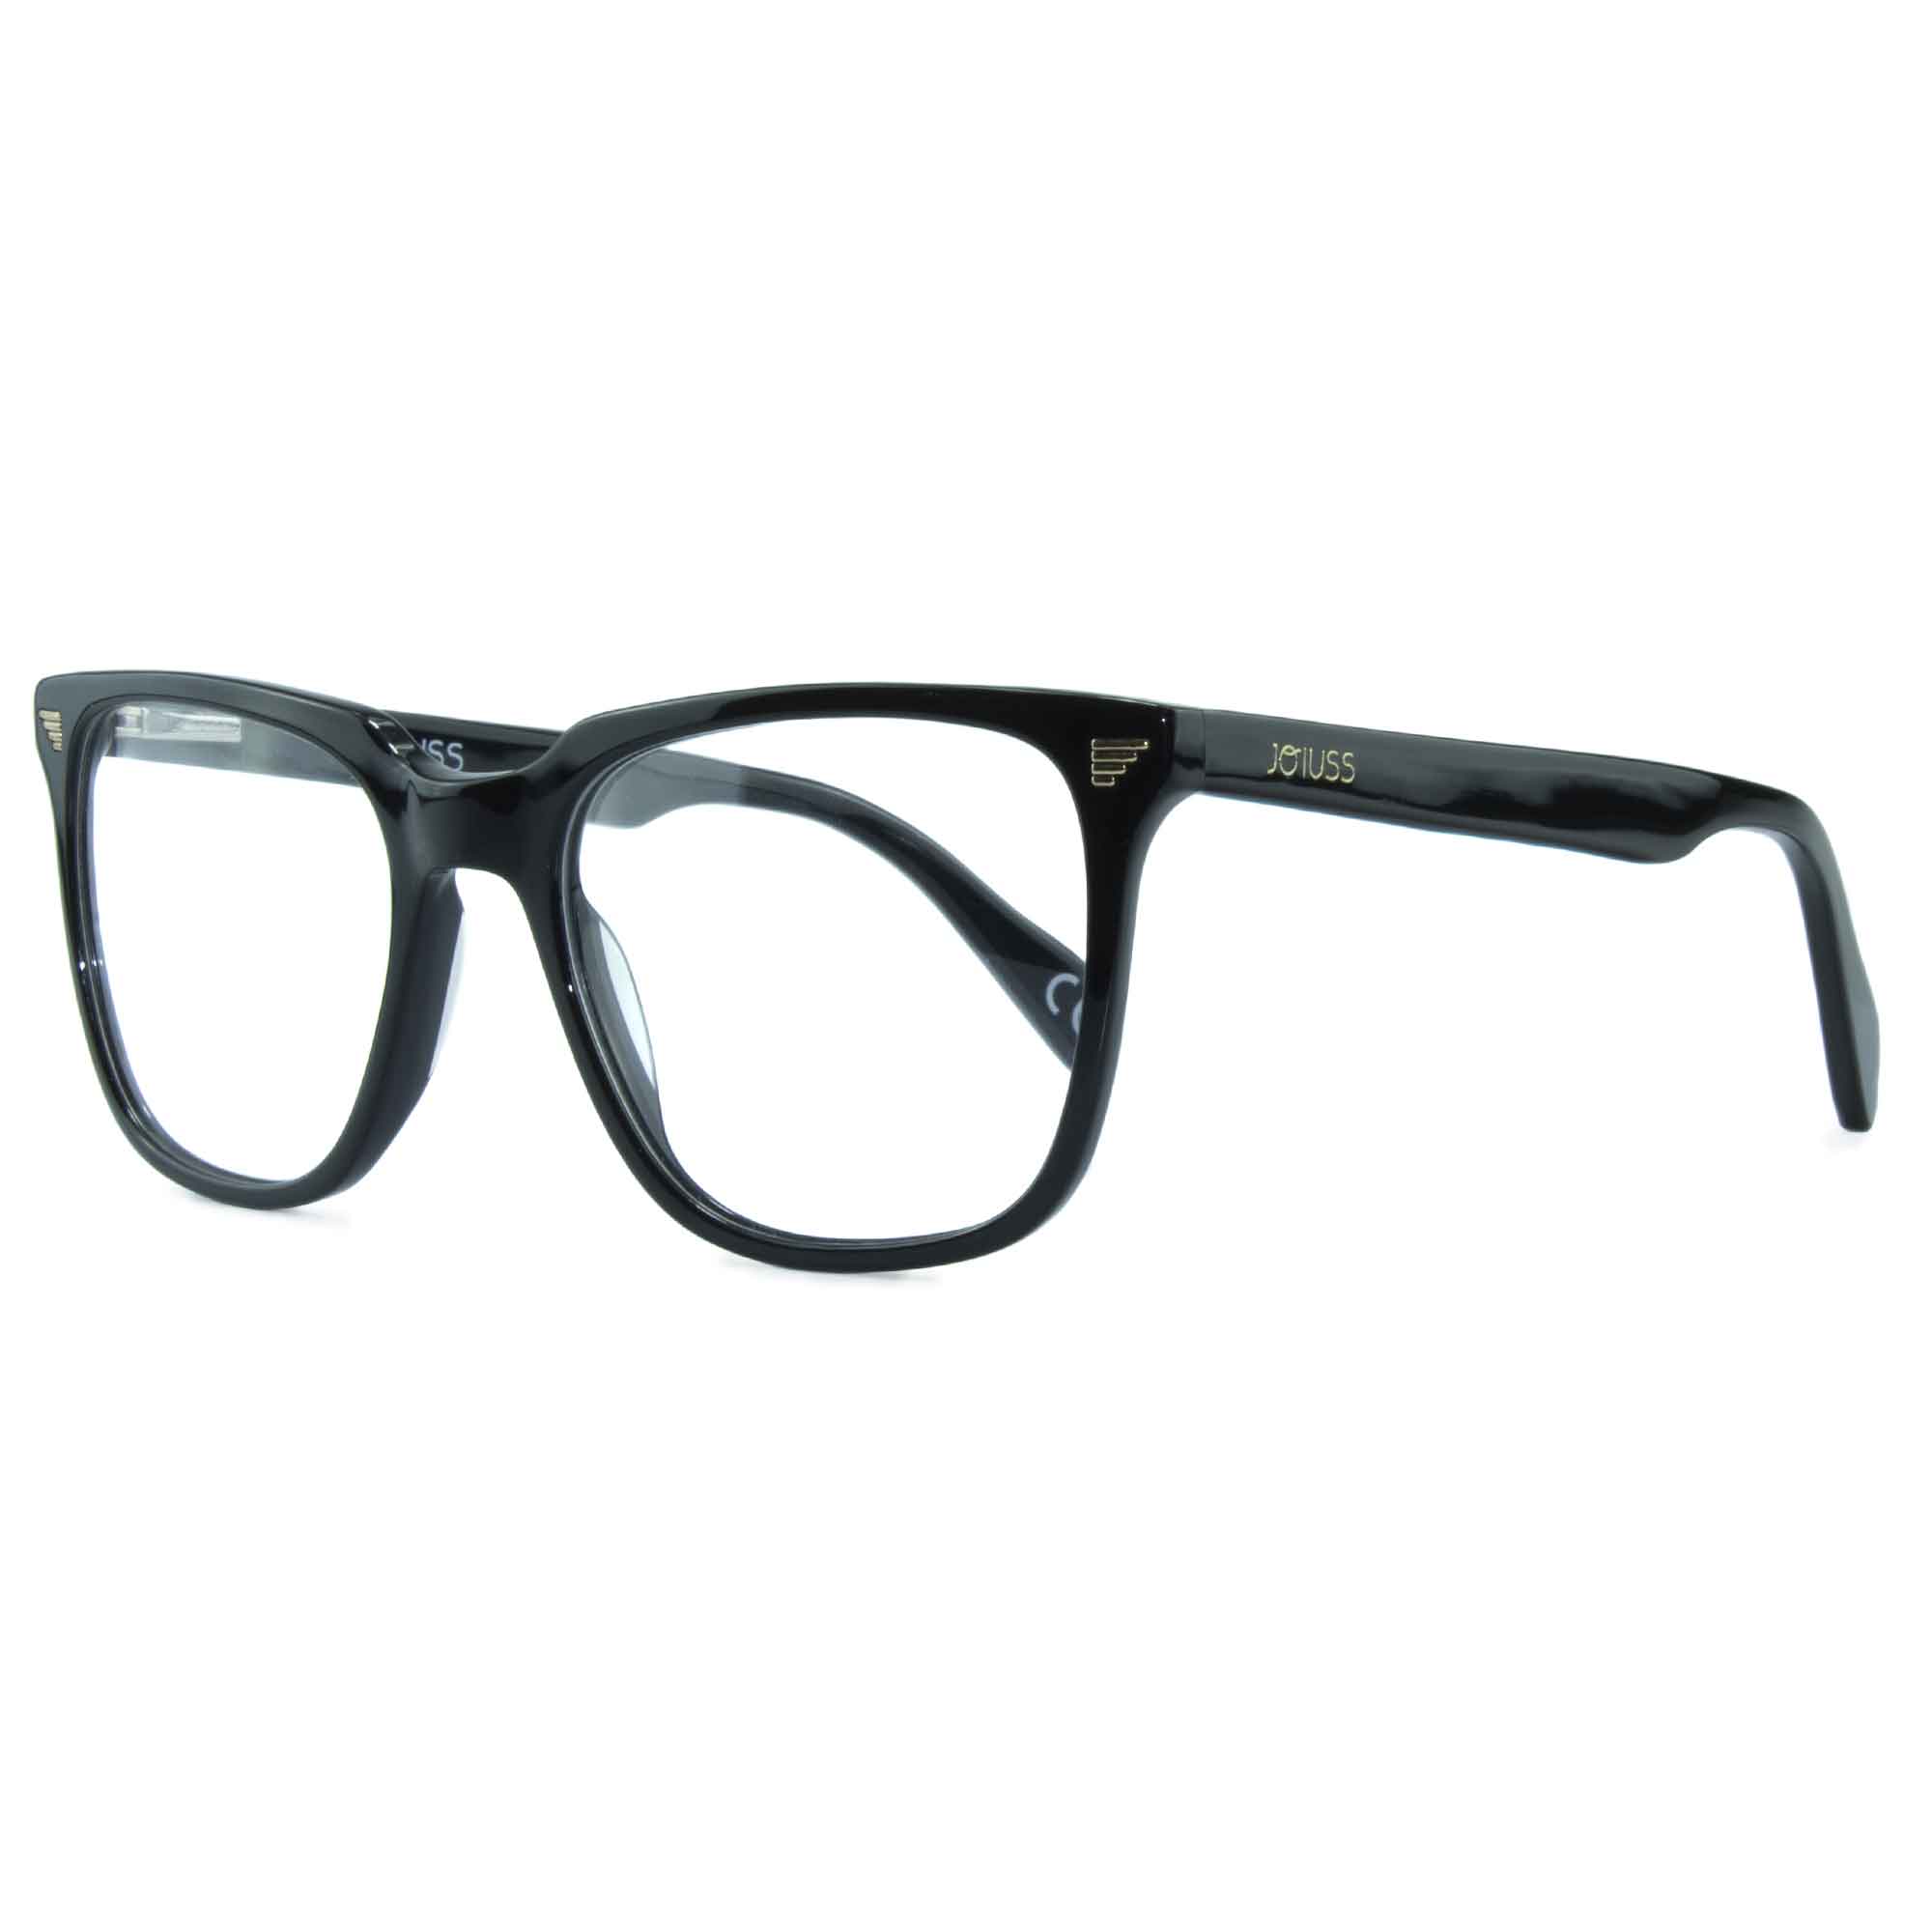 Square Glasses Frames - Black - Kent